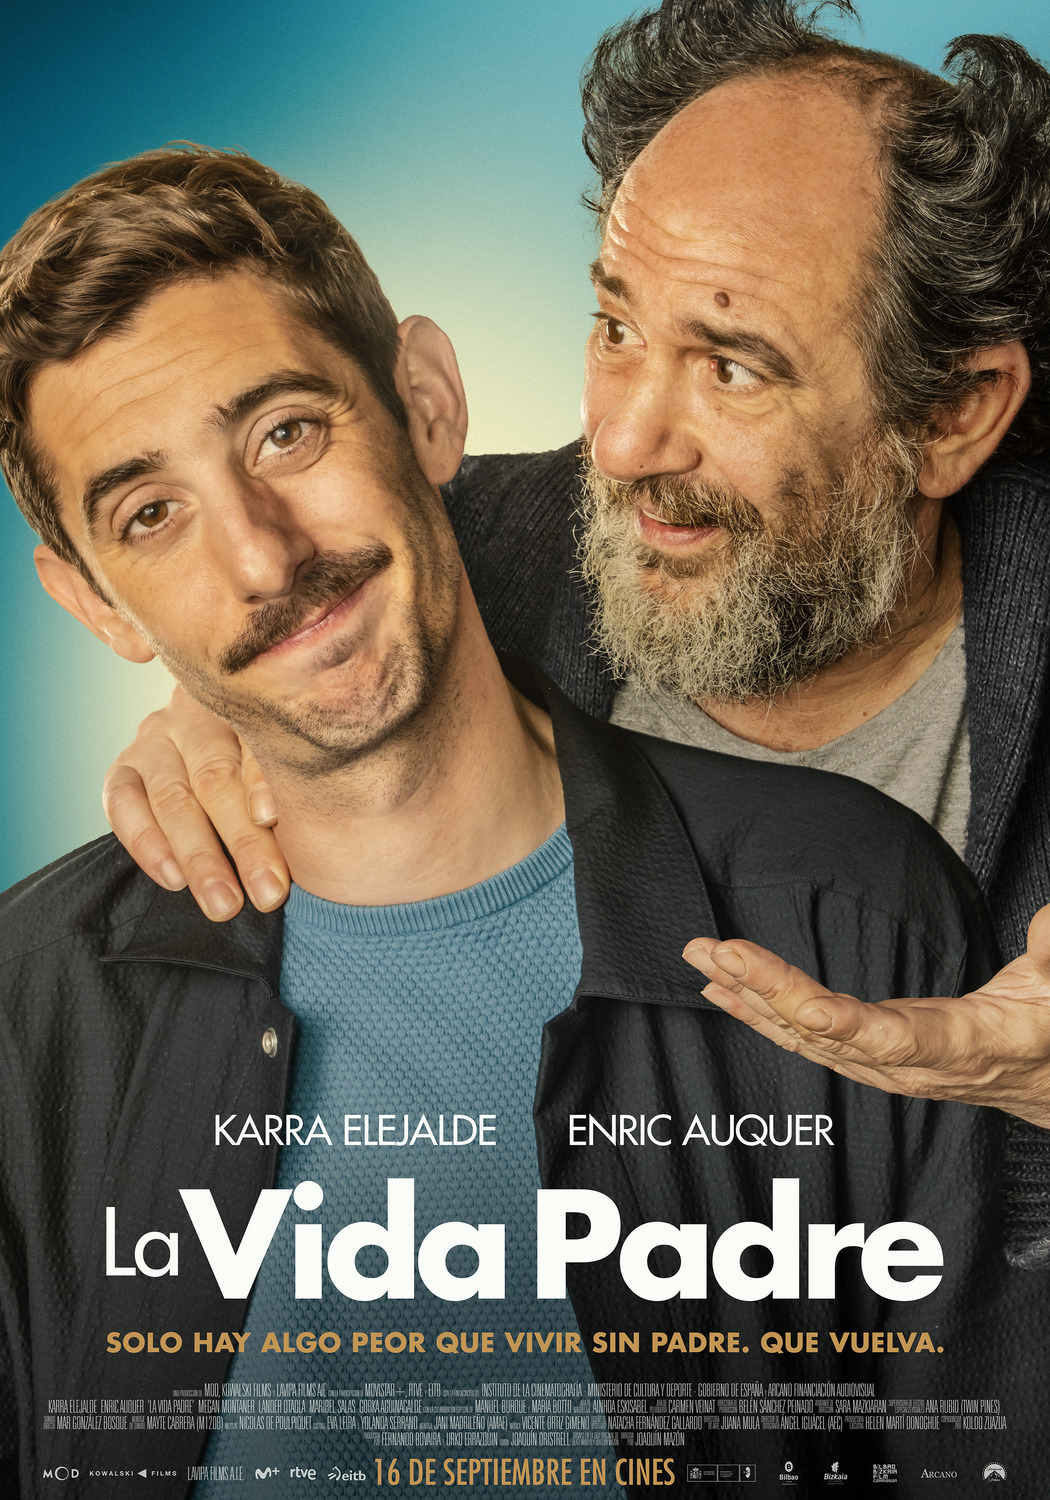 Extra Large Movie Poster Image for La vida padre 